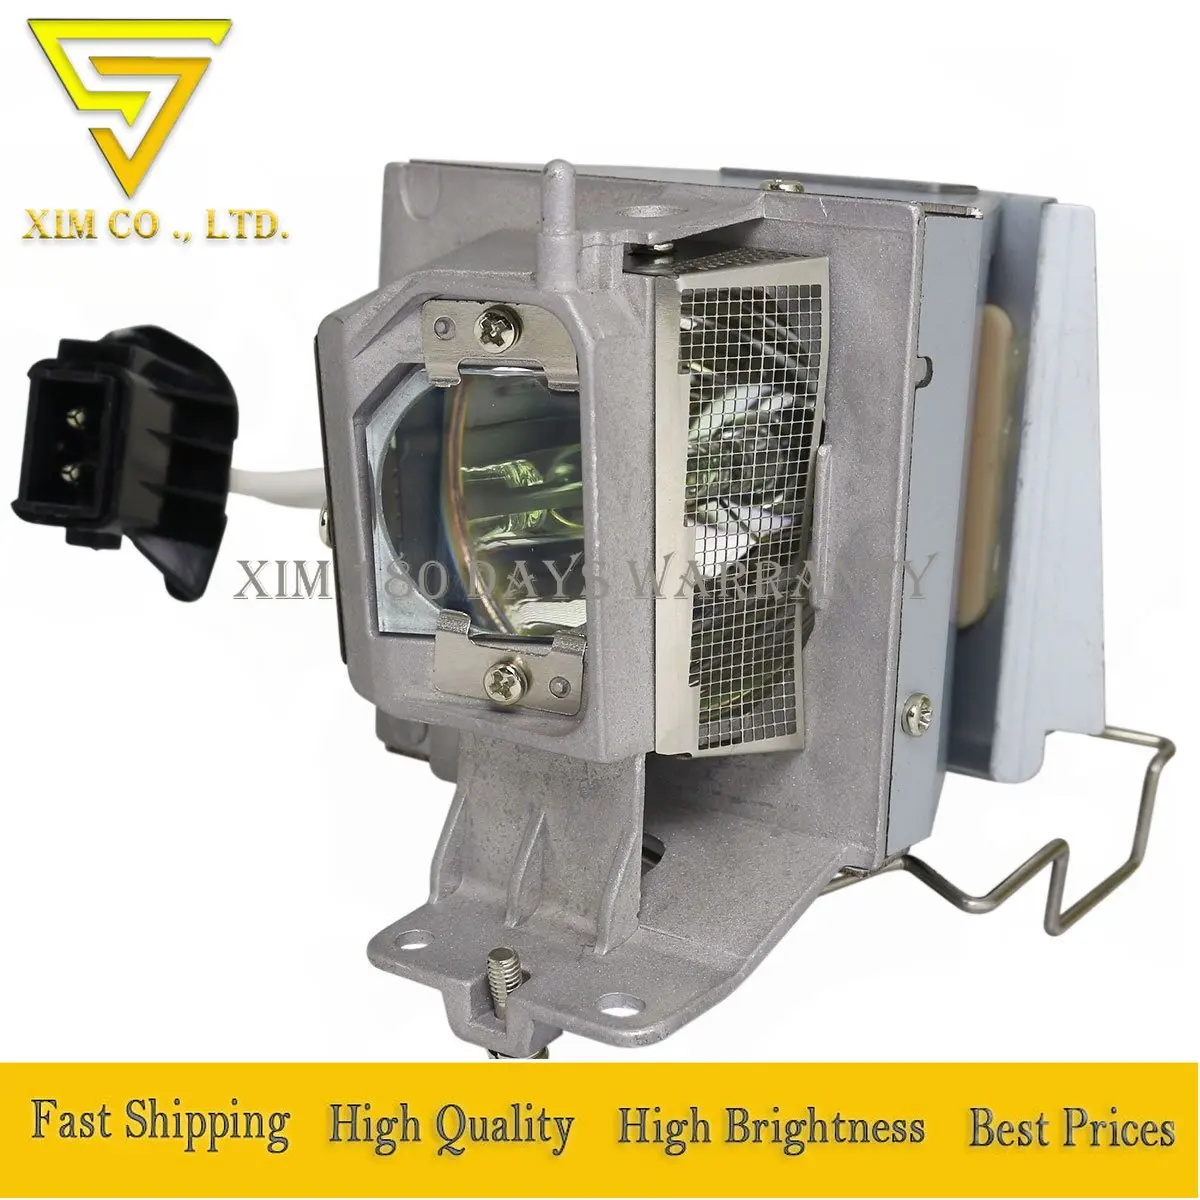 

Premium Quality MC.JLC11.001 Professional Replacement Projector Lamp Bulb Compatible for ACER P1287 P1387W P5515 Projectors